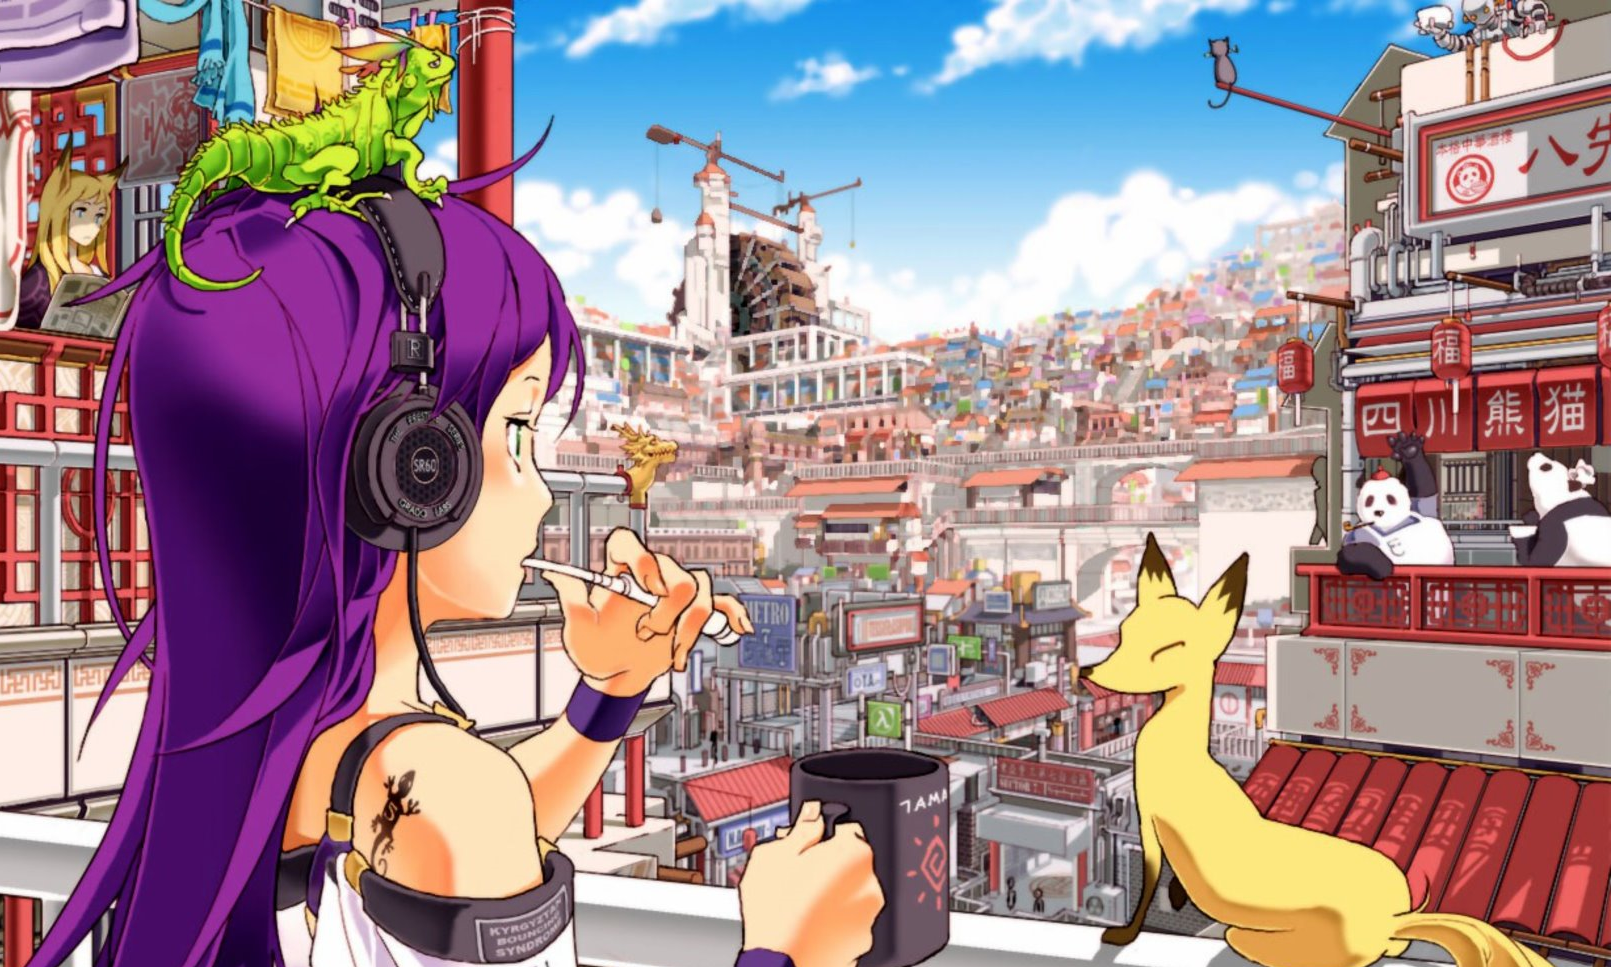 Anime wallpaper by Microkey on DeviantArt